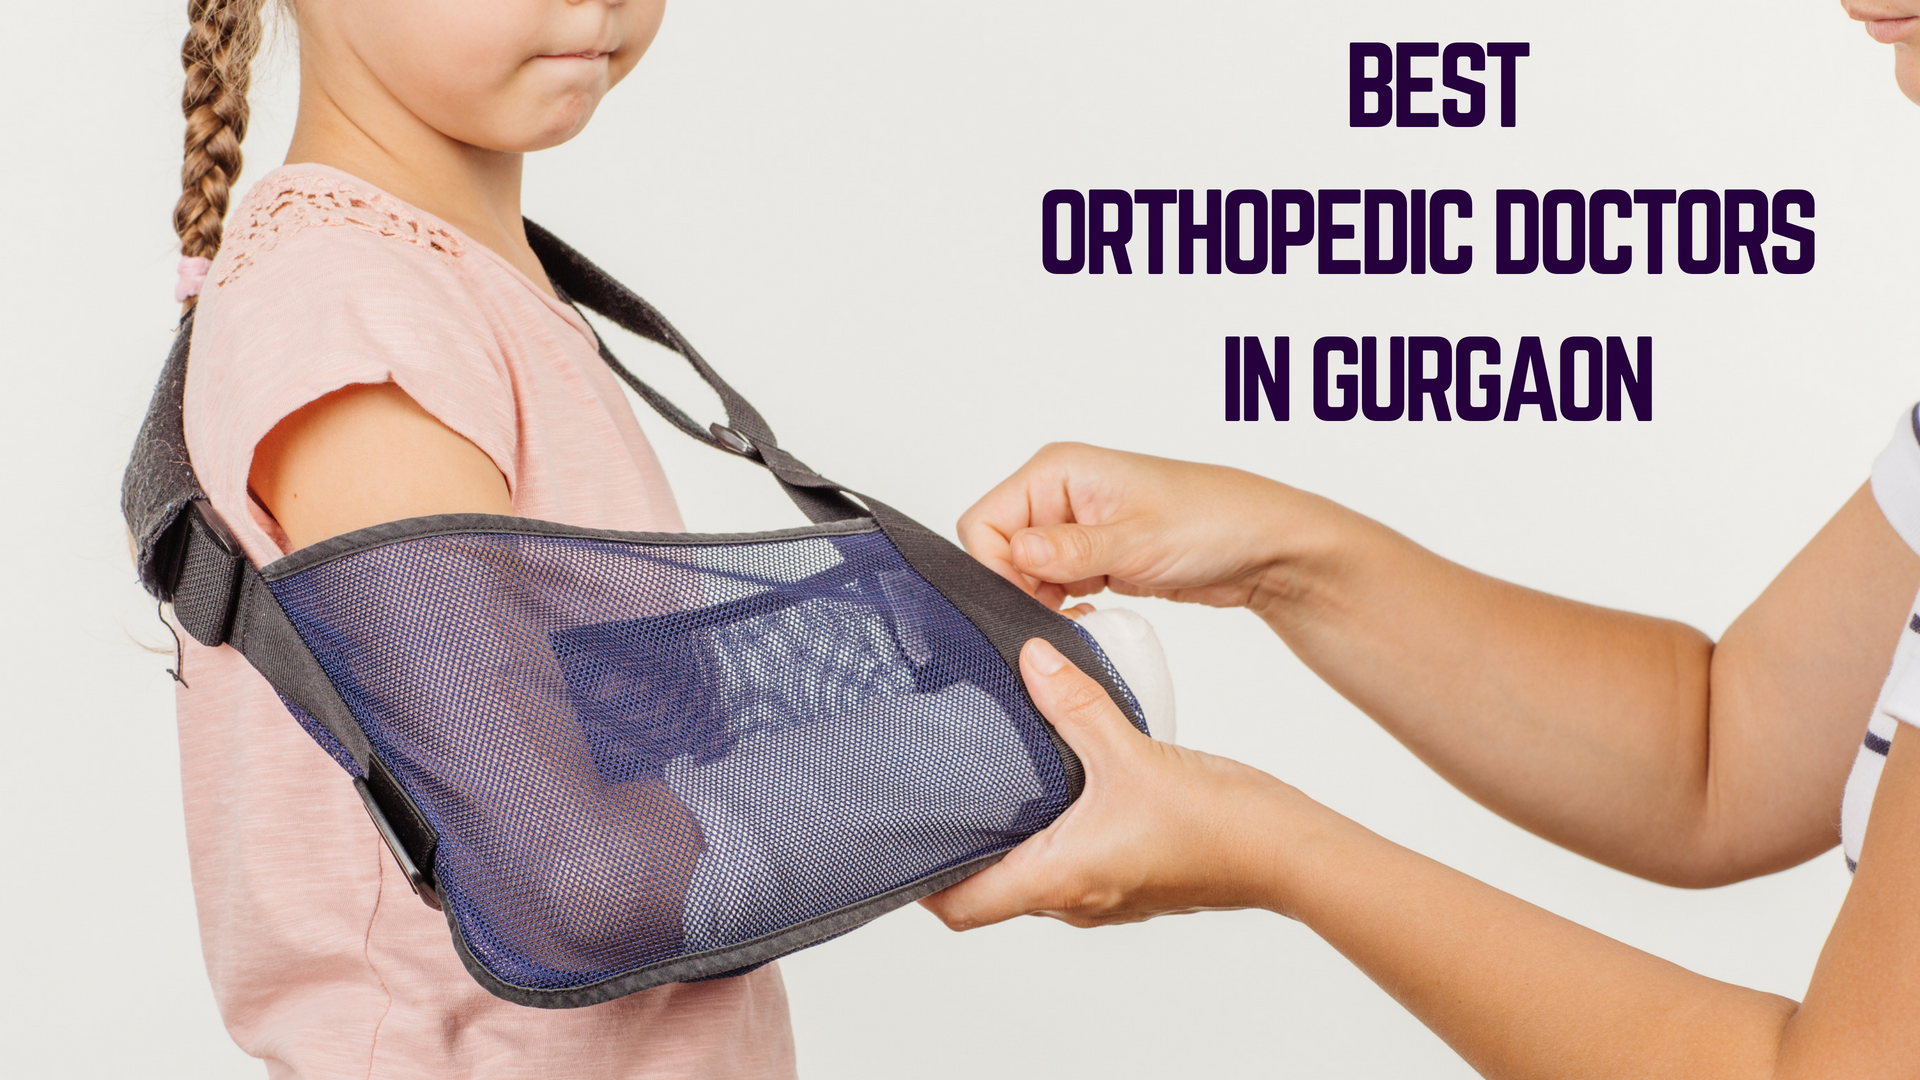 Top 10 Best Orthopedic Doctors In Gurgaon List 2020 Essencz